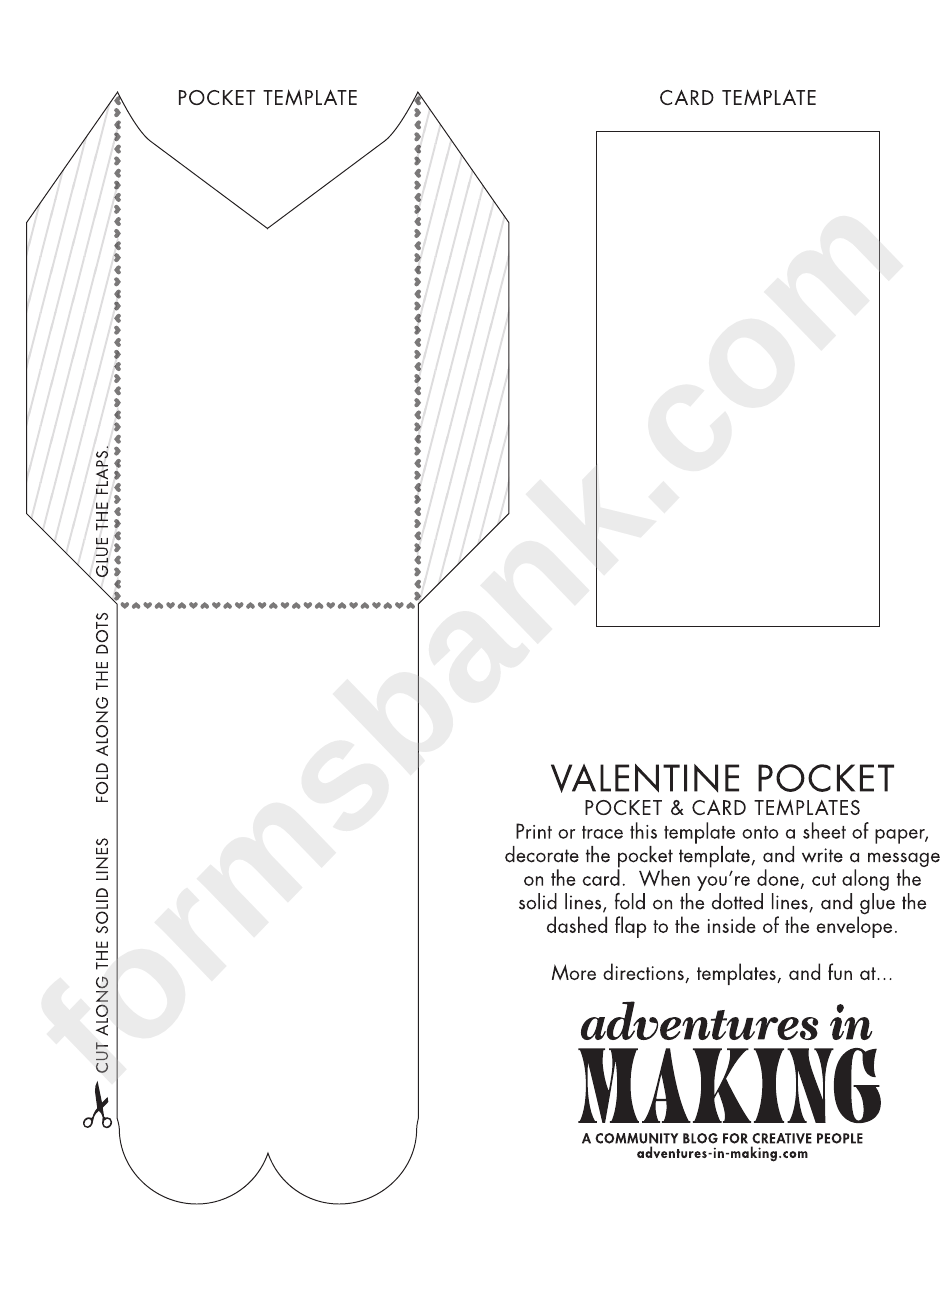 Valentine Pocket & Card Template